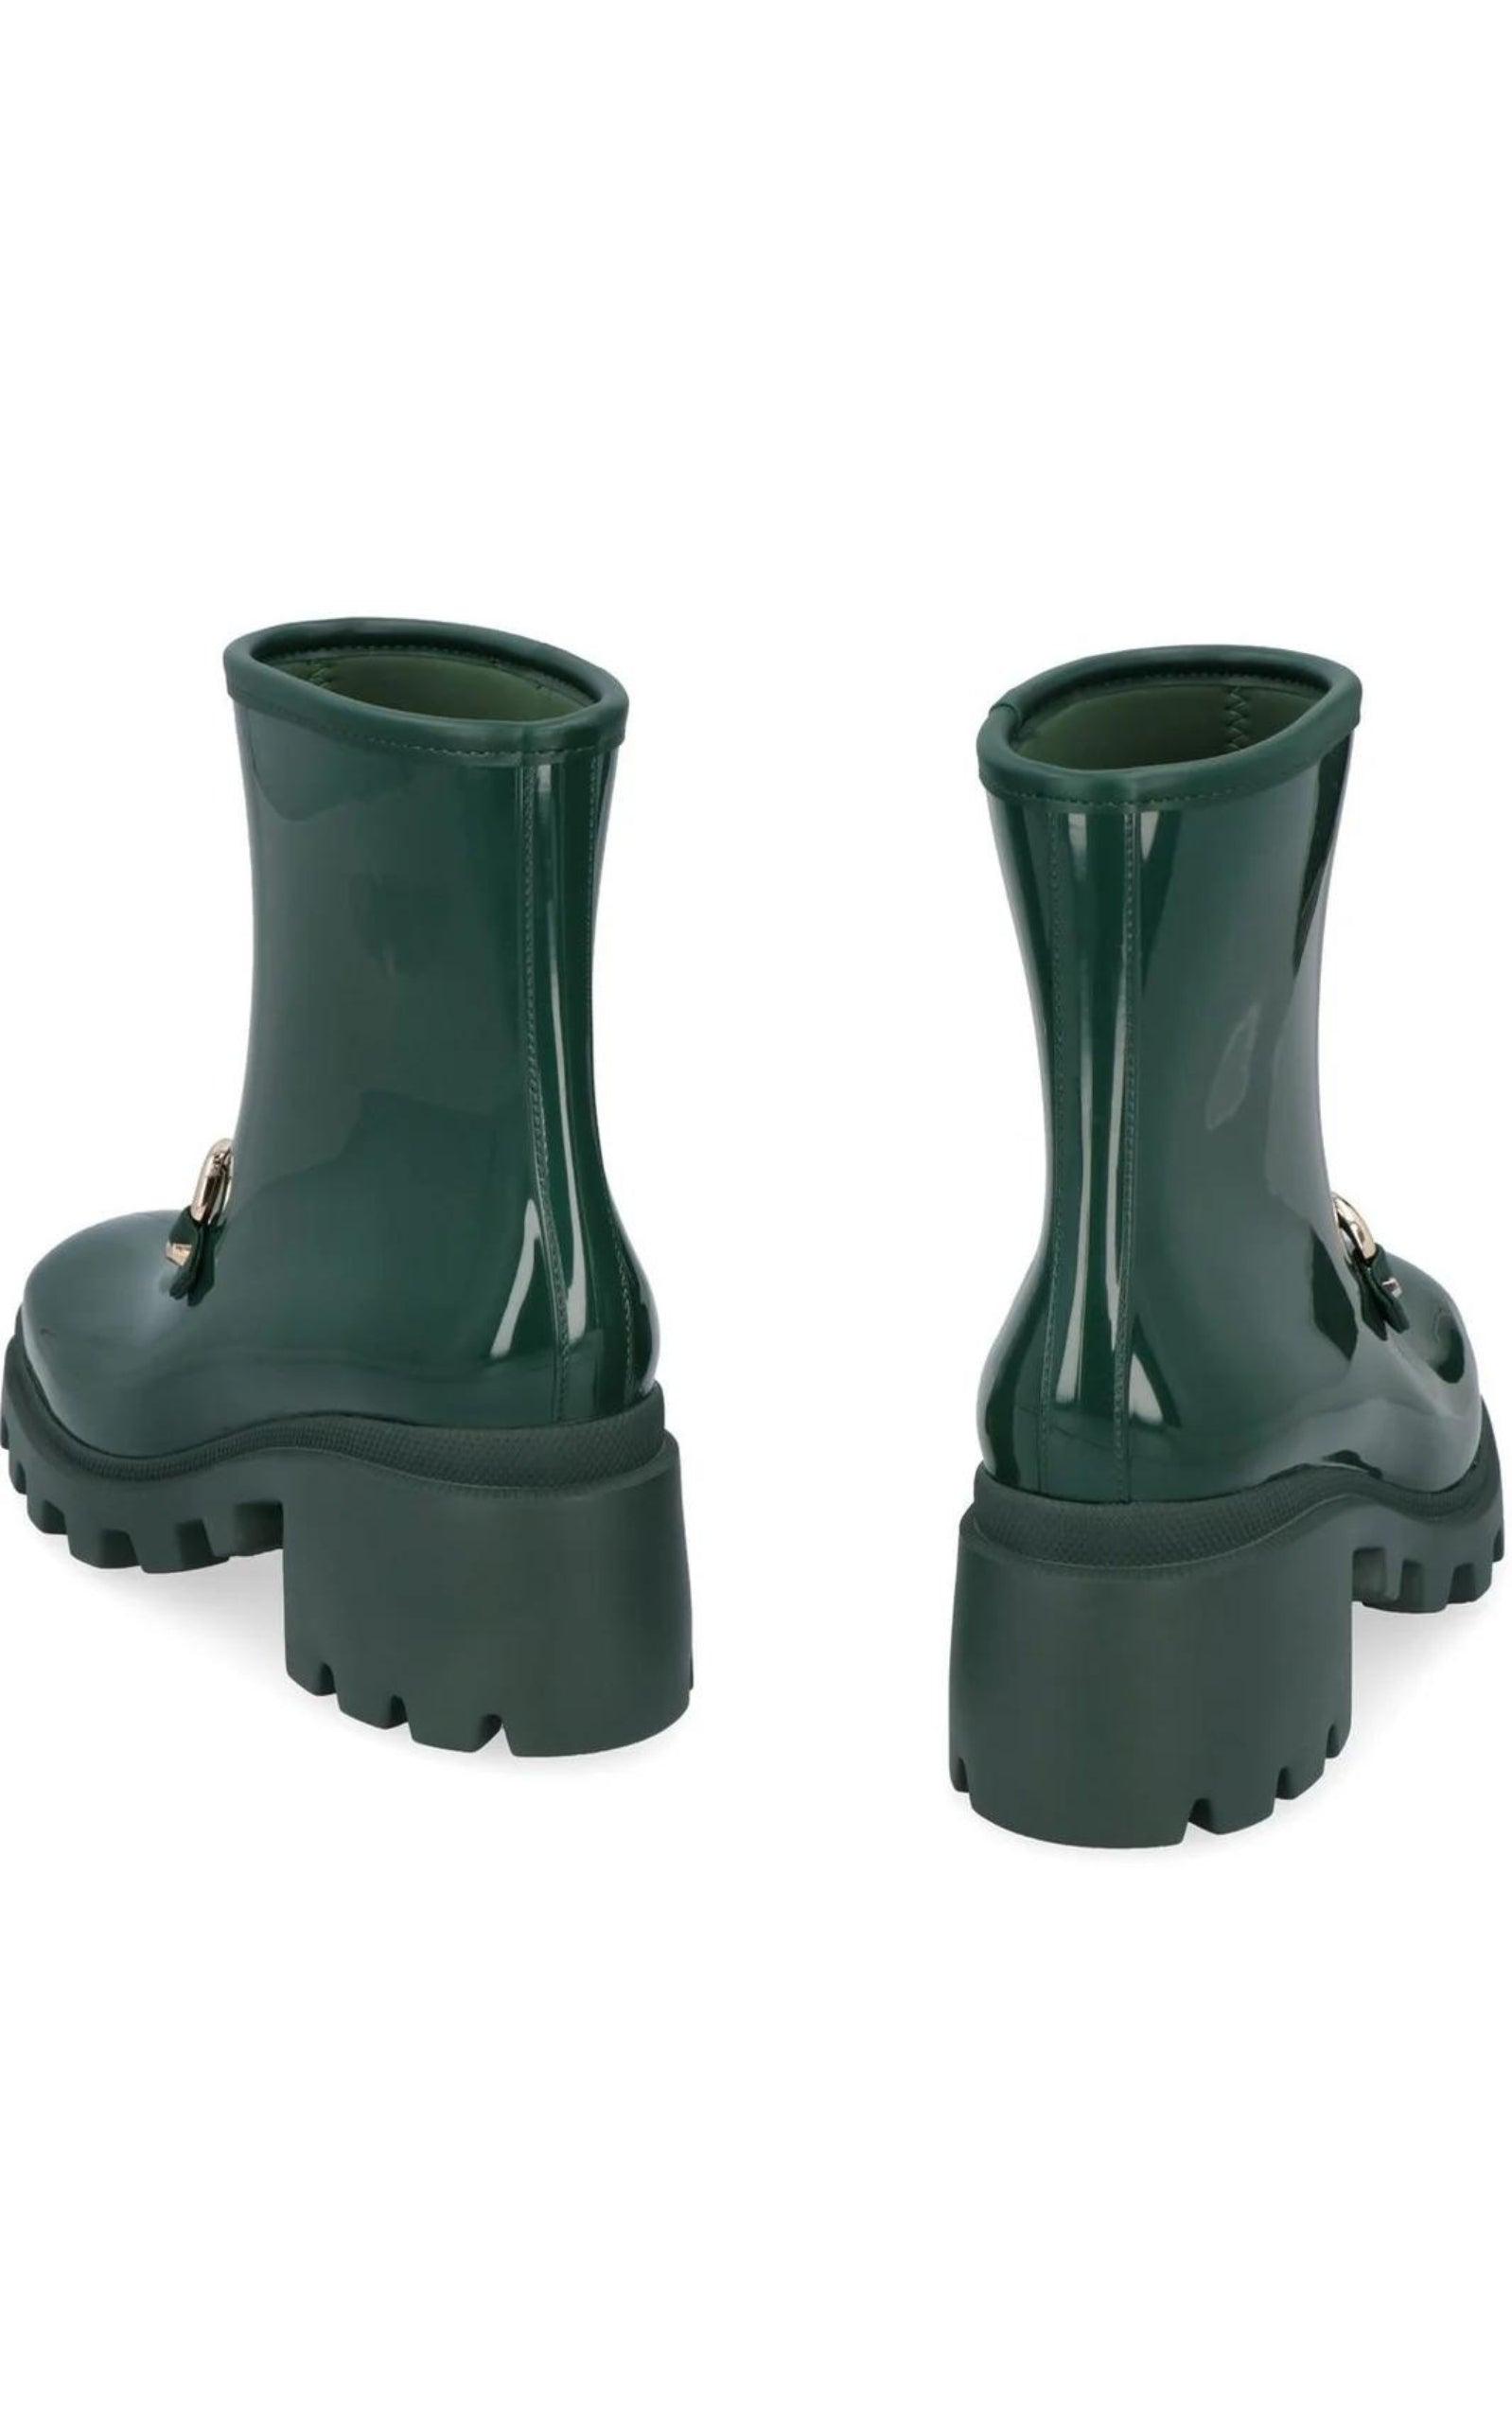  GucciHorsebit - Detailed Heeled Rubber Rain Boots in Green - Runway Catalog